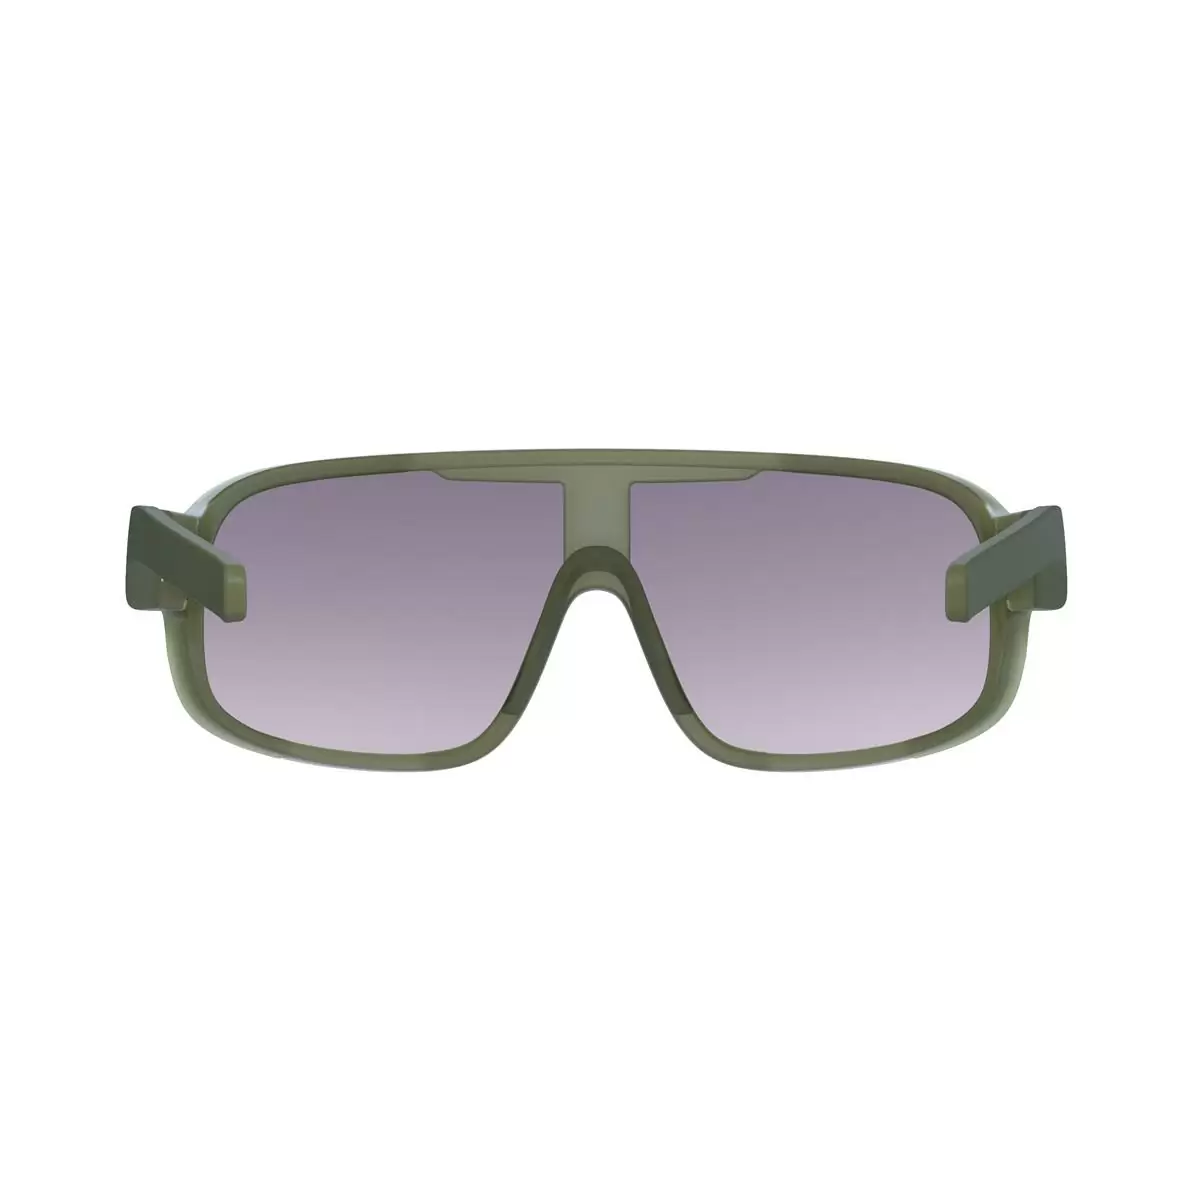 Occhiali Aspire Epidote Green Translucent Lente Violet/Silver Mirror #3